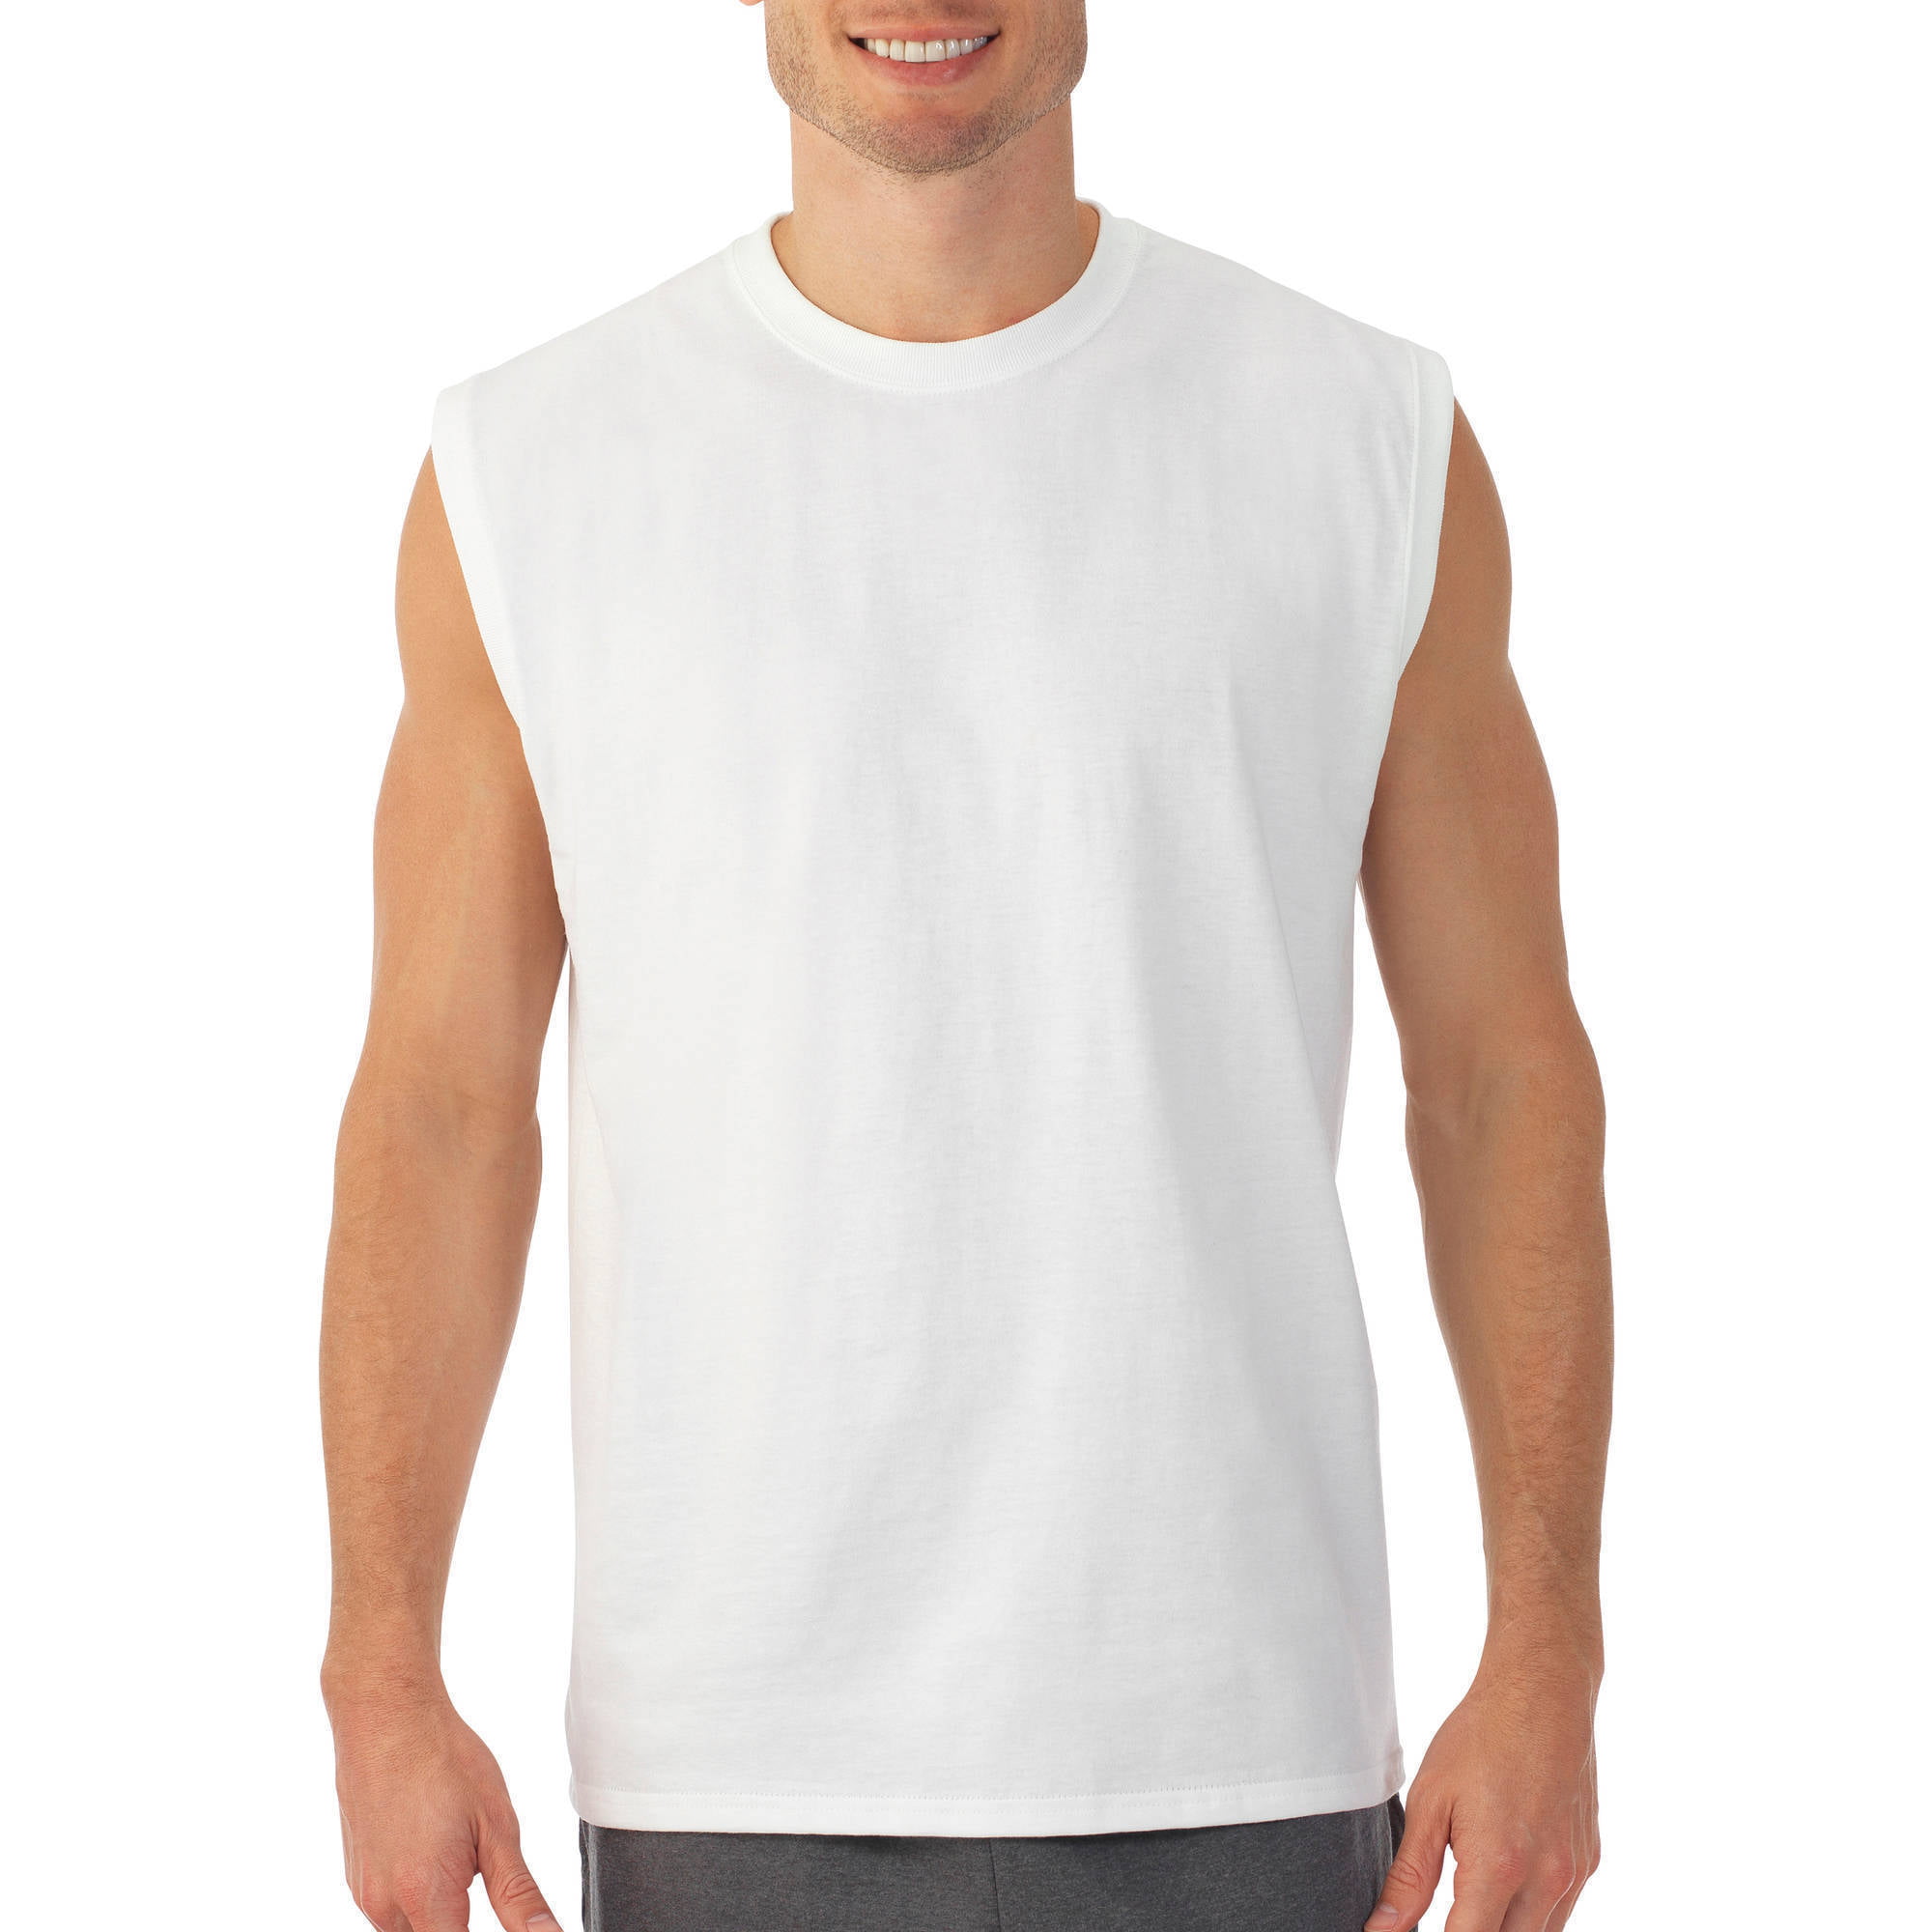 Big Men's Muscle T-Shirt with Rib Trim - Walmart.com